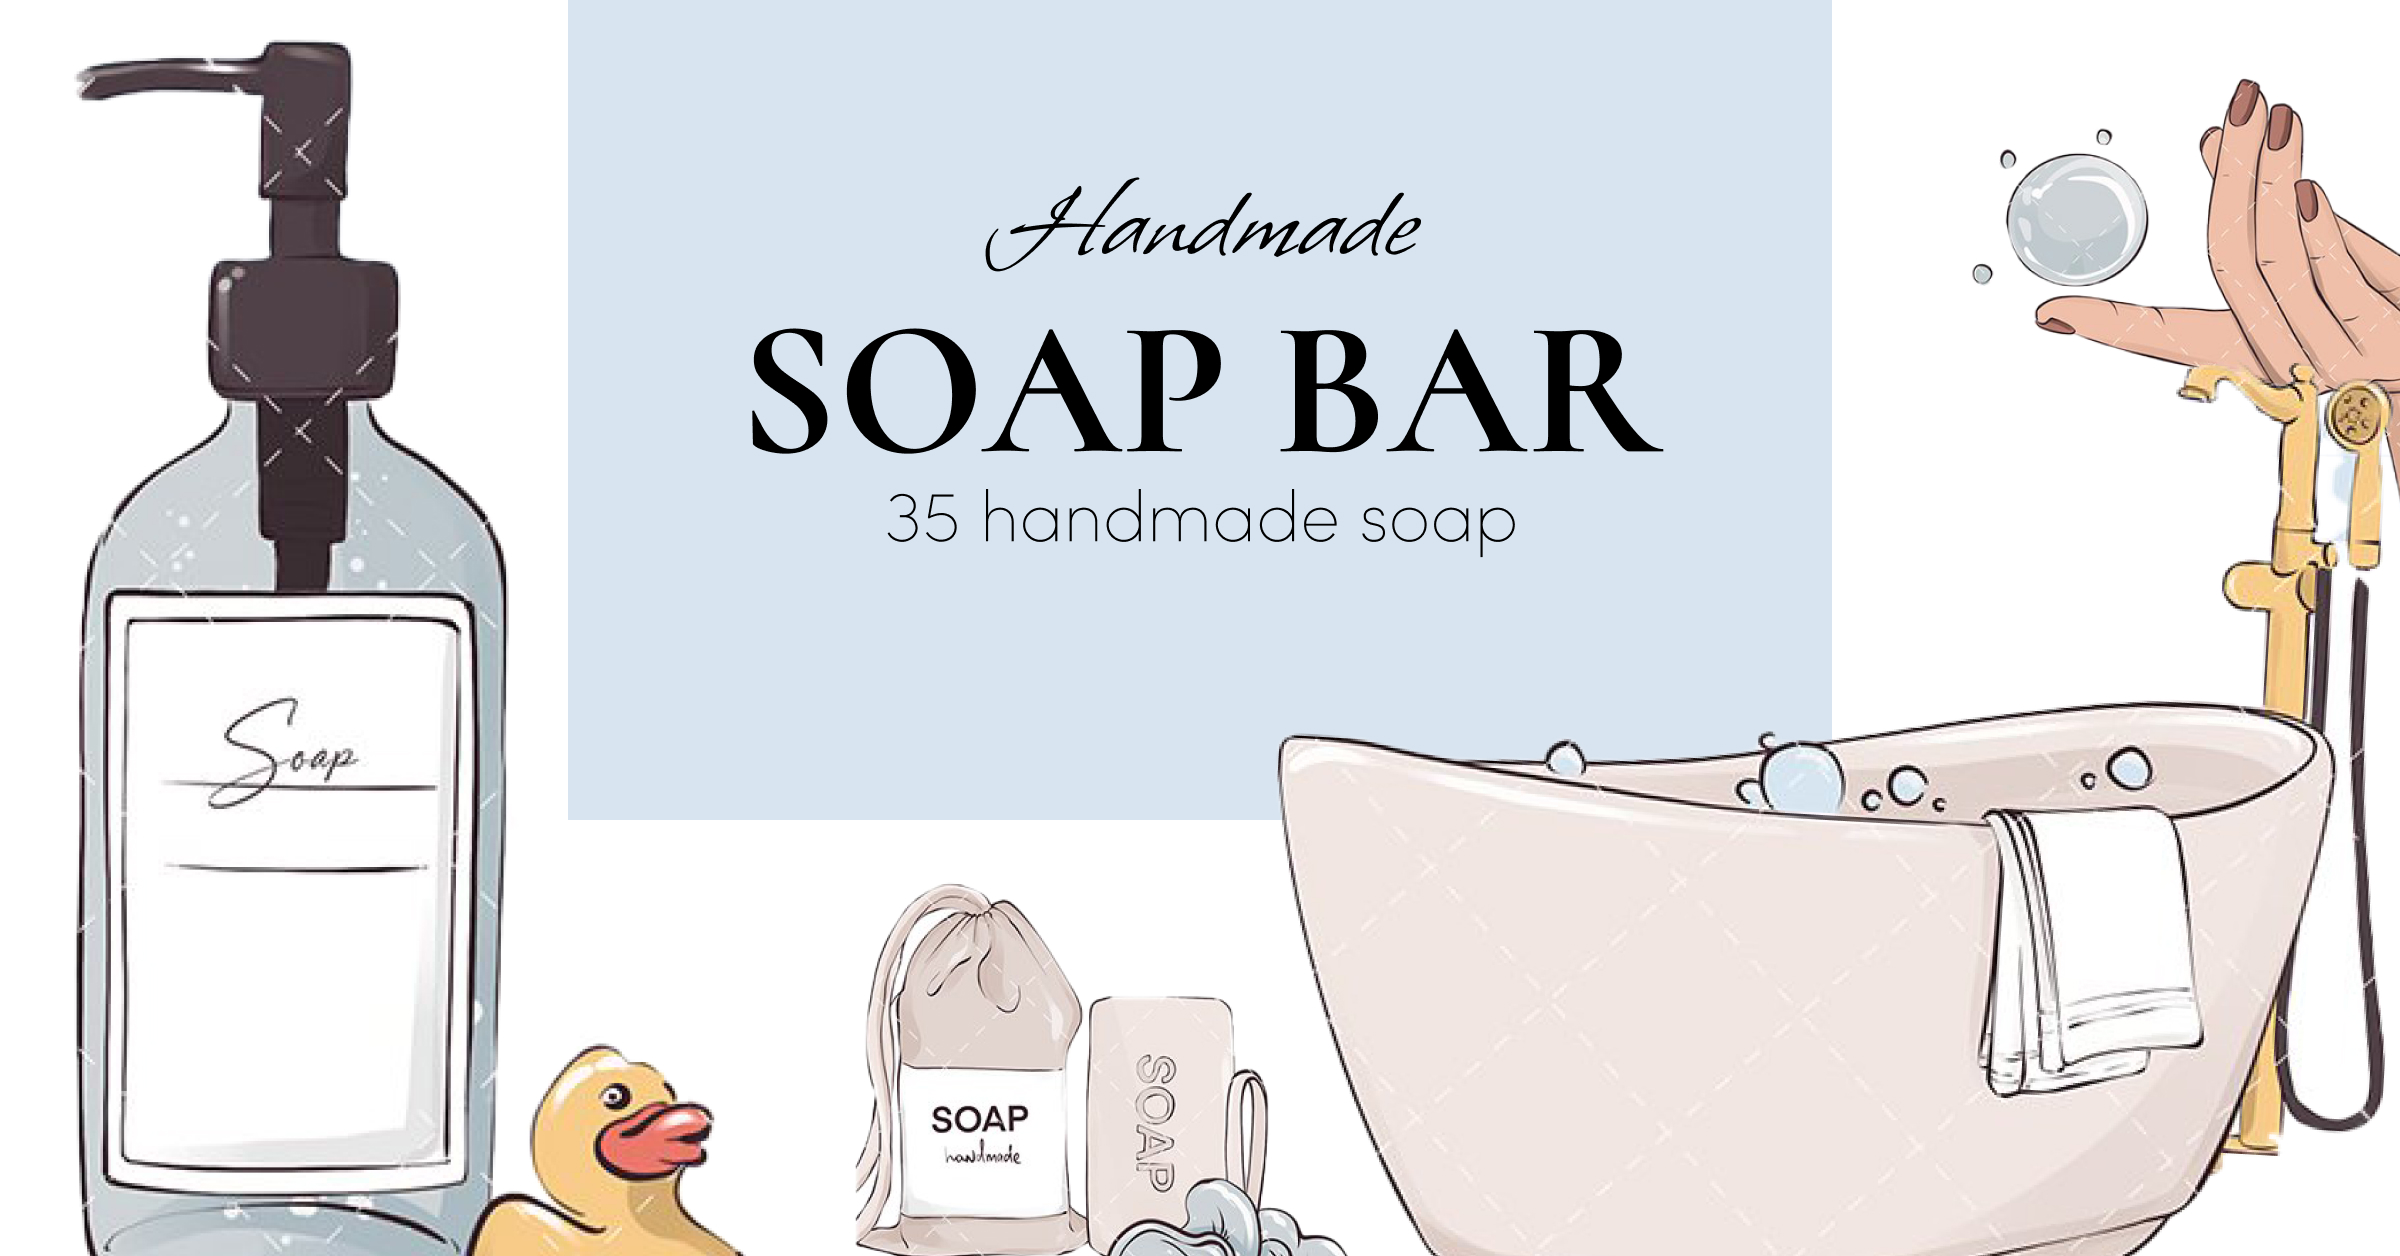 soap clipart